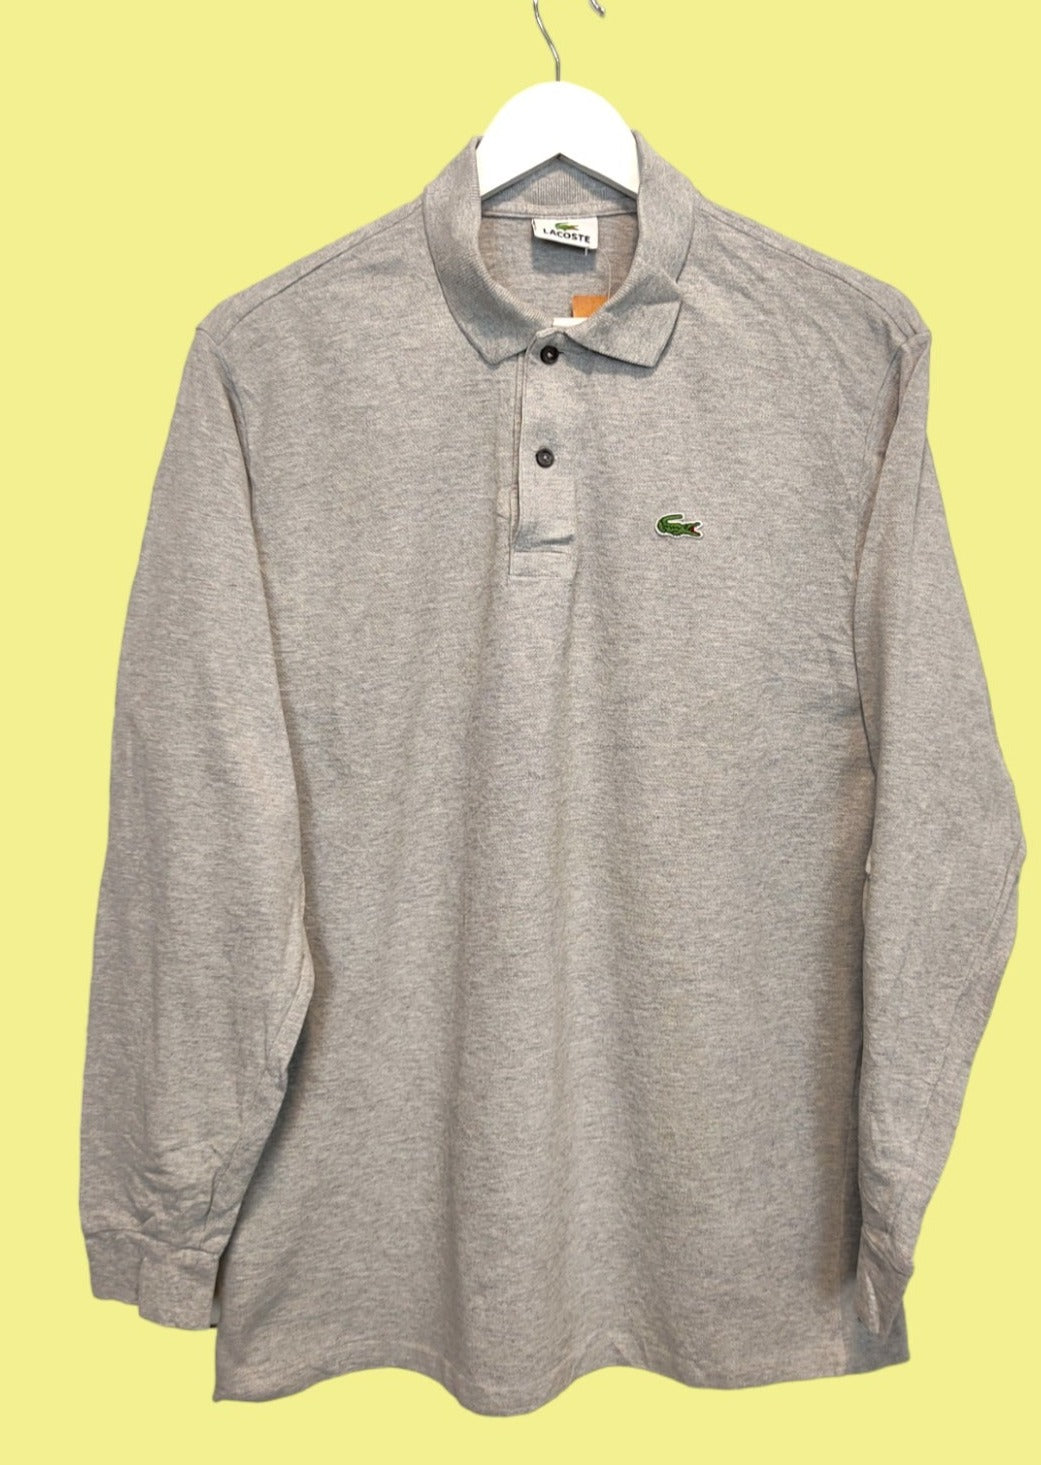 Top Branded Ανδρική Μπλούζα σε ανοιχτό Γκρι χρώμα (Large)